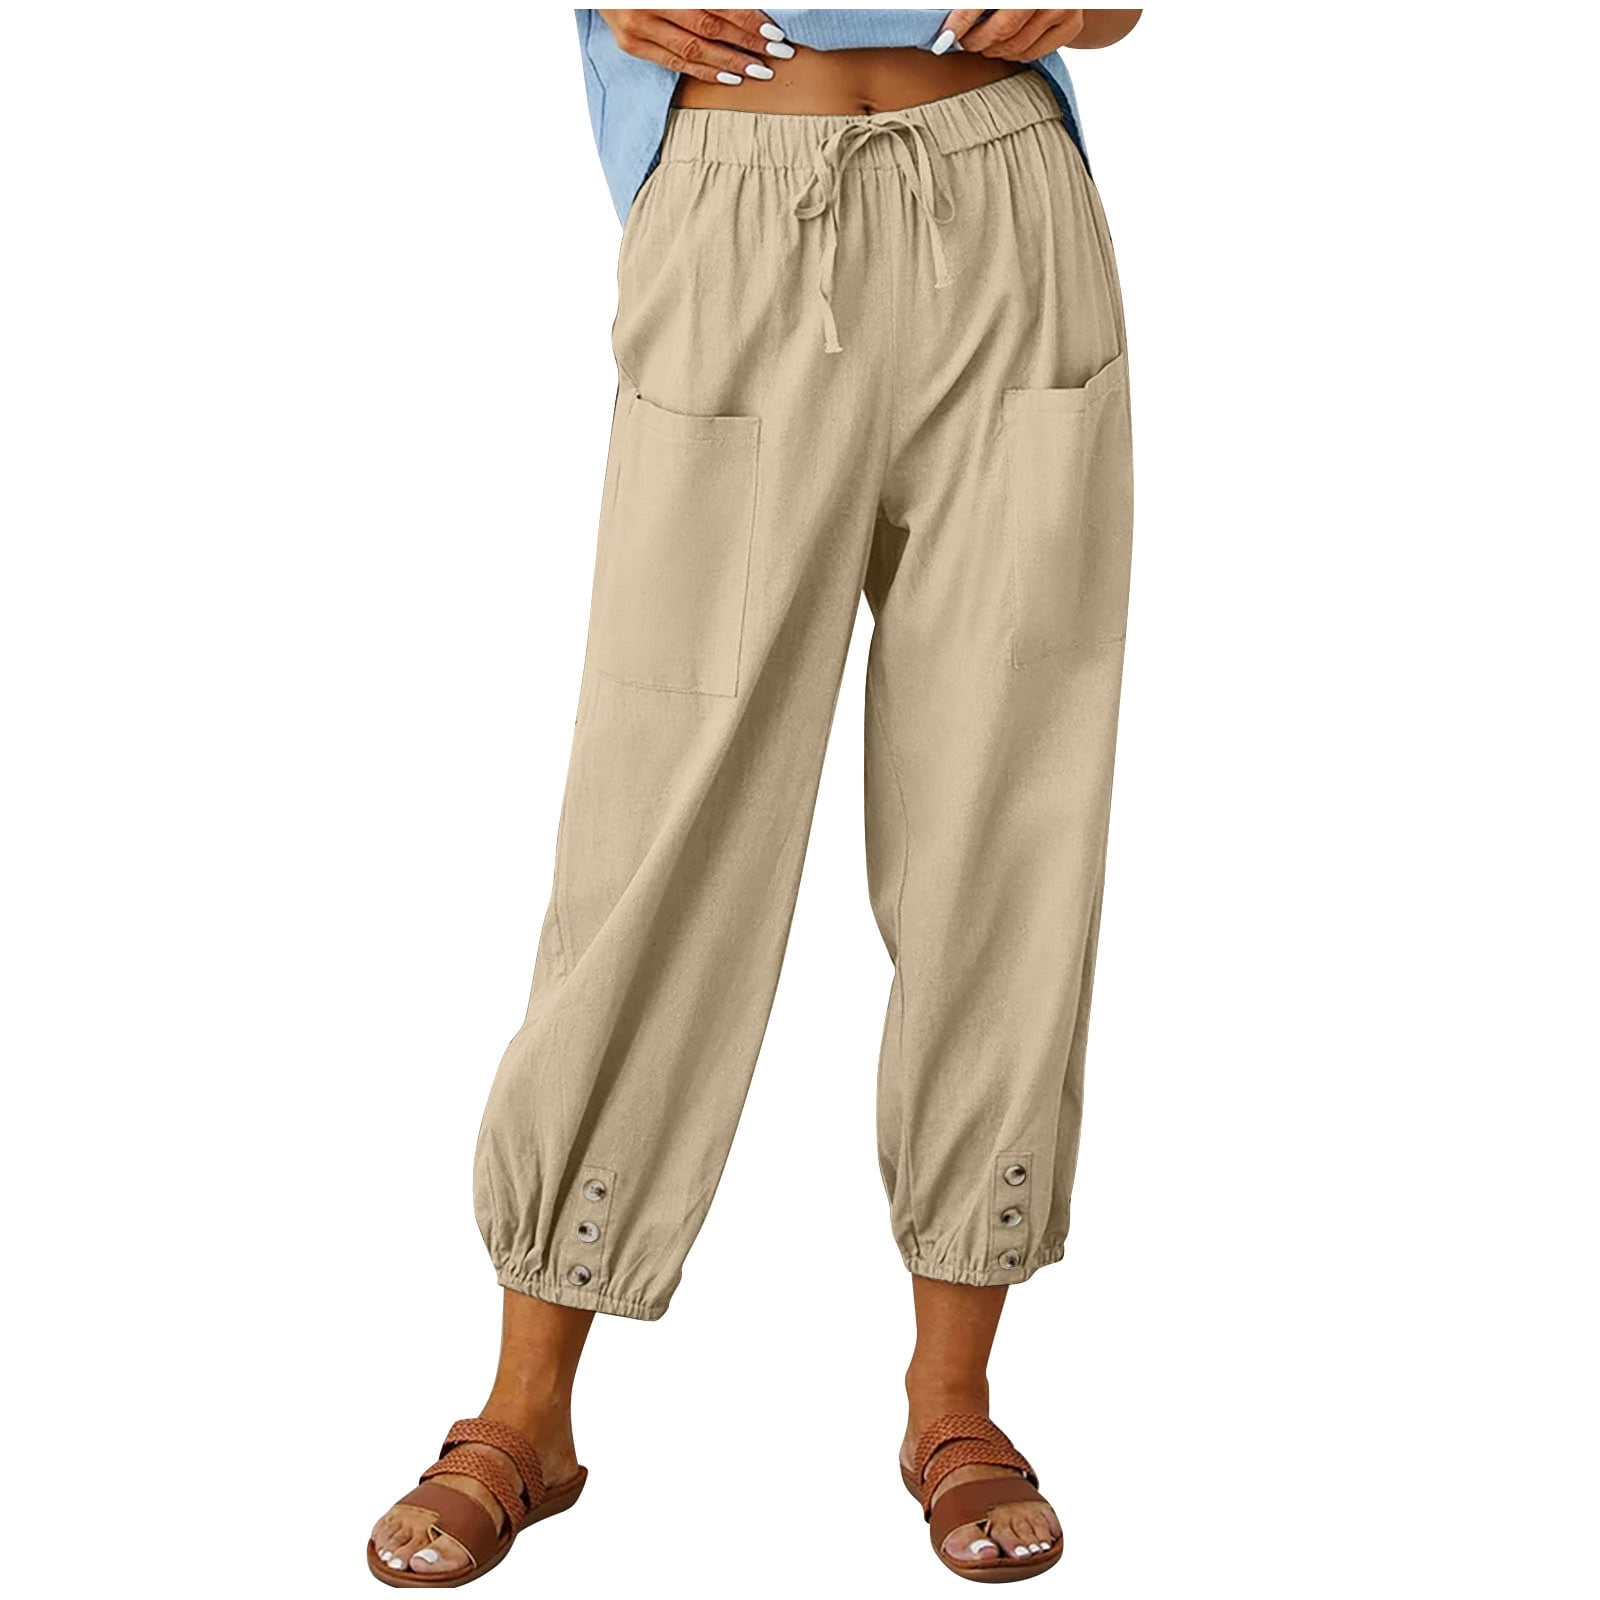 Womens PLUS SIZE Utility POCKET Khaki Capri Pants Toasted Brown 20W  eBay